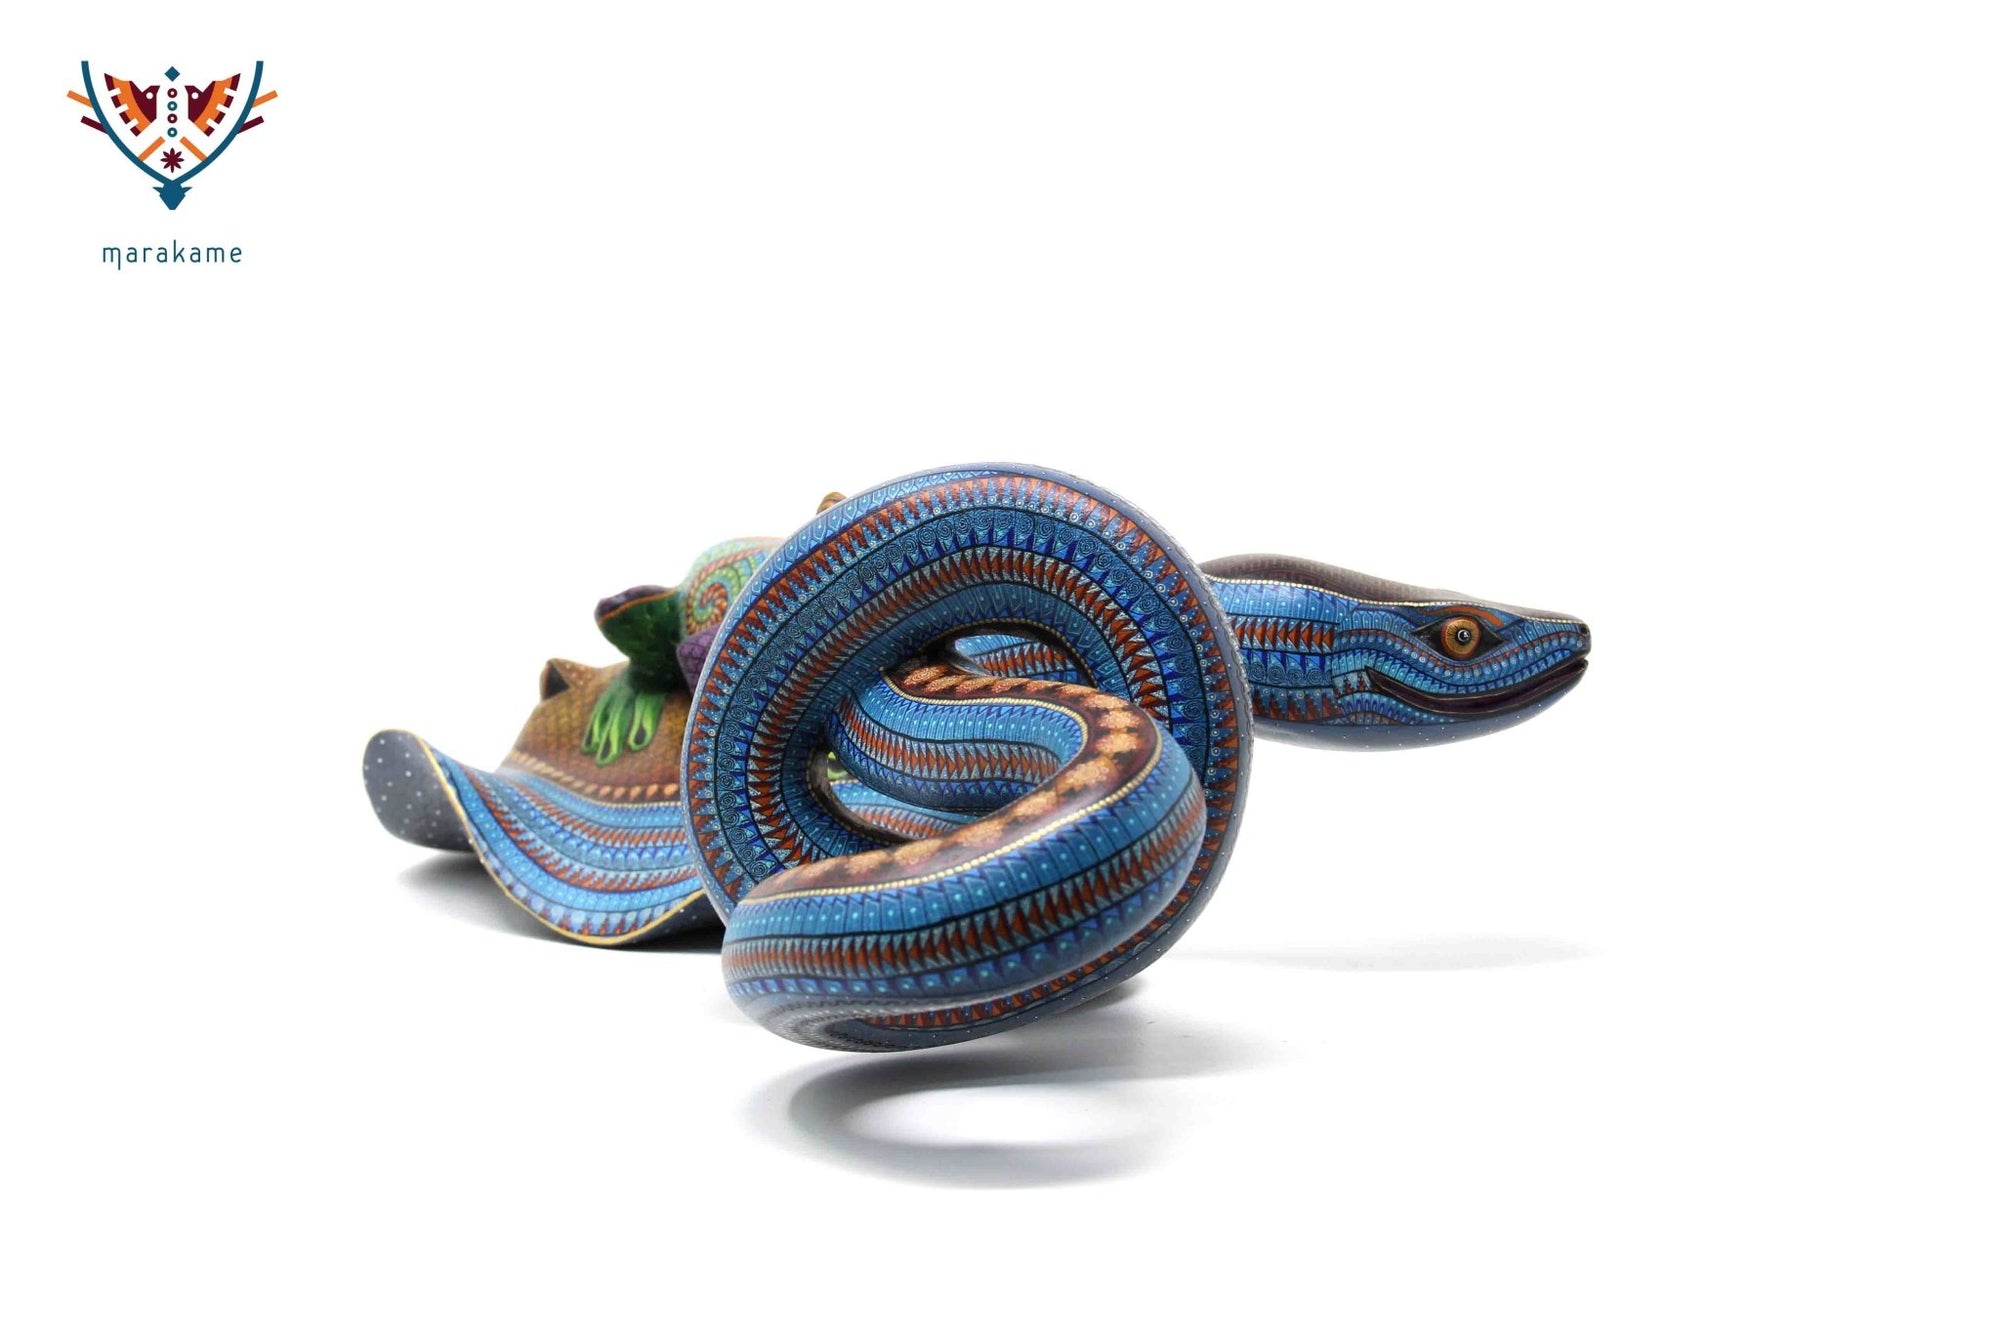 Alebrije - Manta Ray Serpent - Huichol Art - Marakame